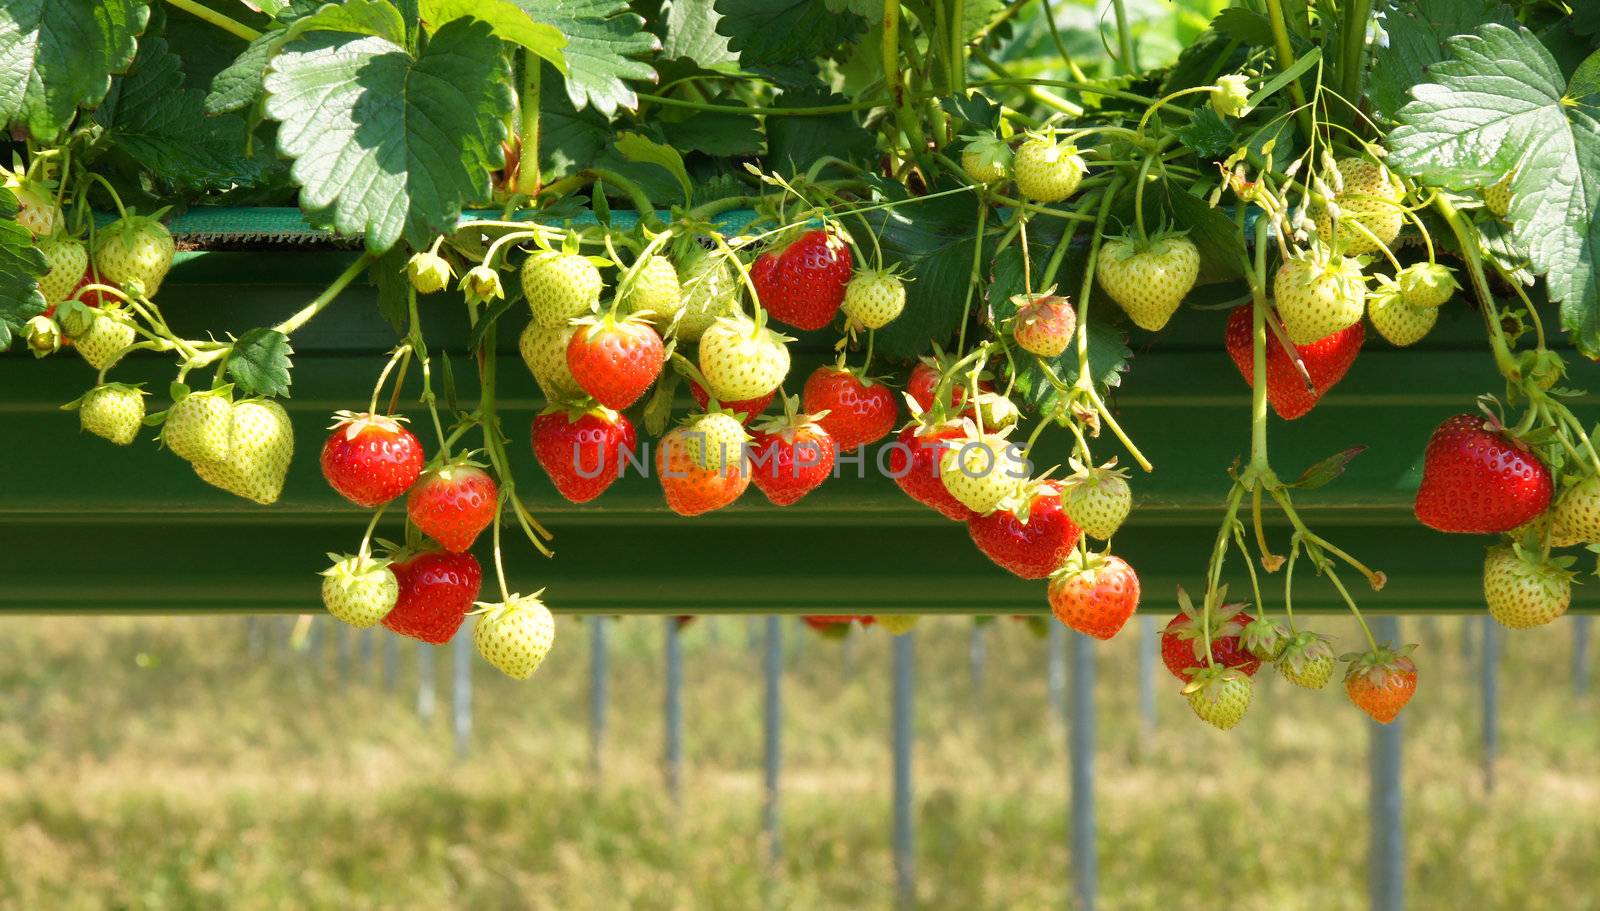 Growing strawberries in hanging baskets